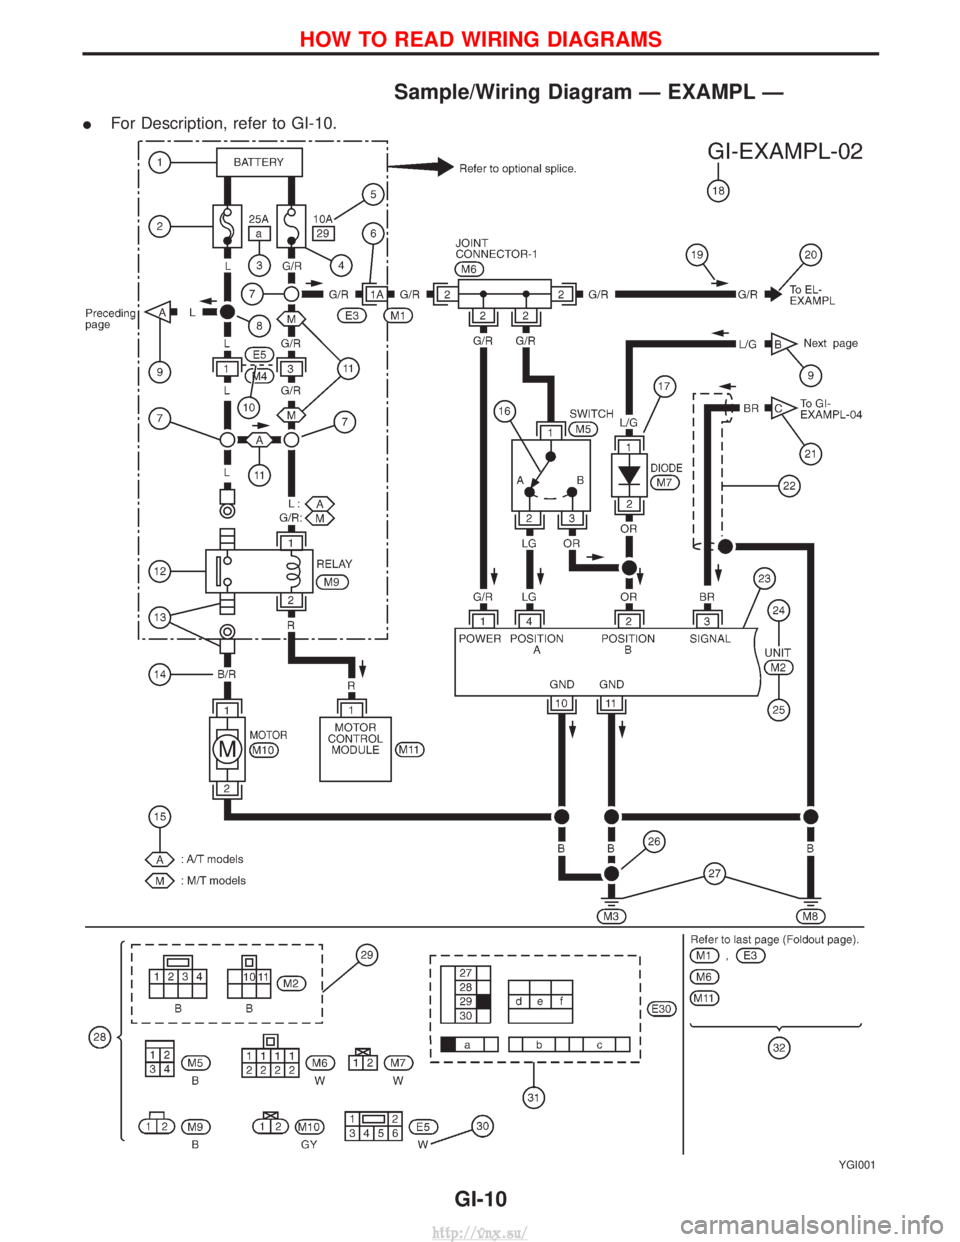 NISSAN TERRANO 2004  Service Repair Manual Sample/Wiring Diagram Ð EXAMPL Ð
IFor Description, refer to GI-10.
YGI001
HOW TO READ WIRING DIAGRAMS
GI-10
http://vnx.su/  